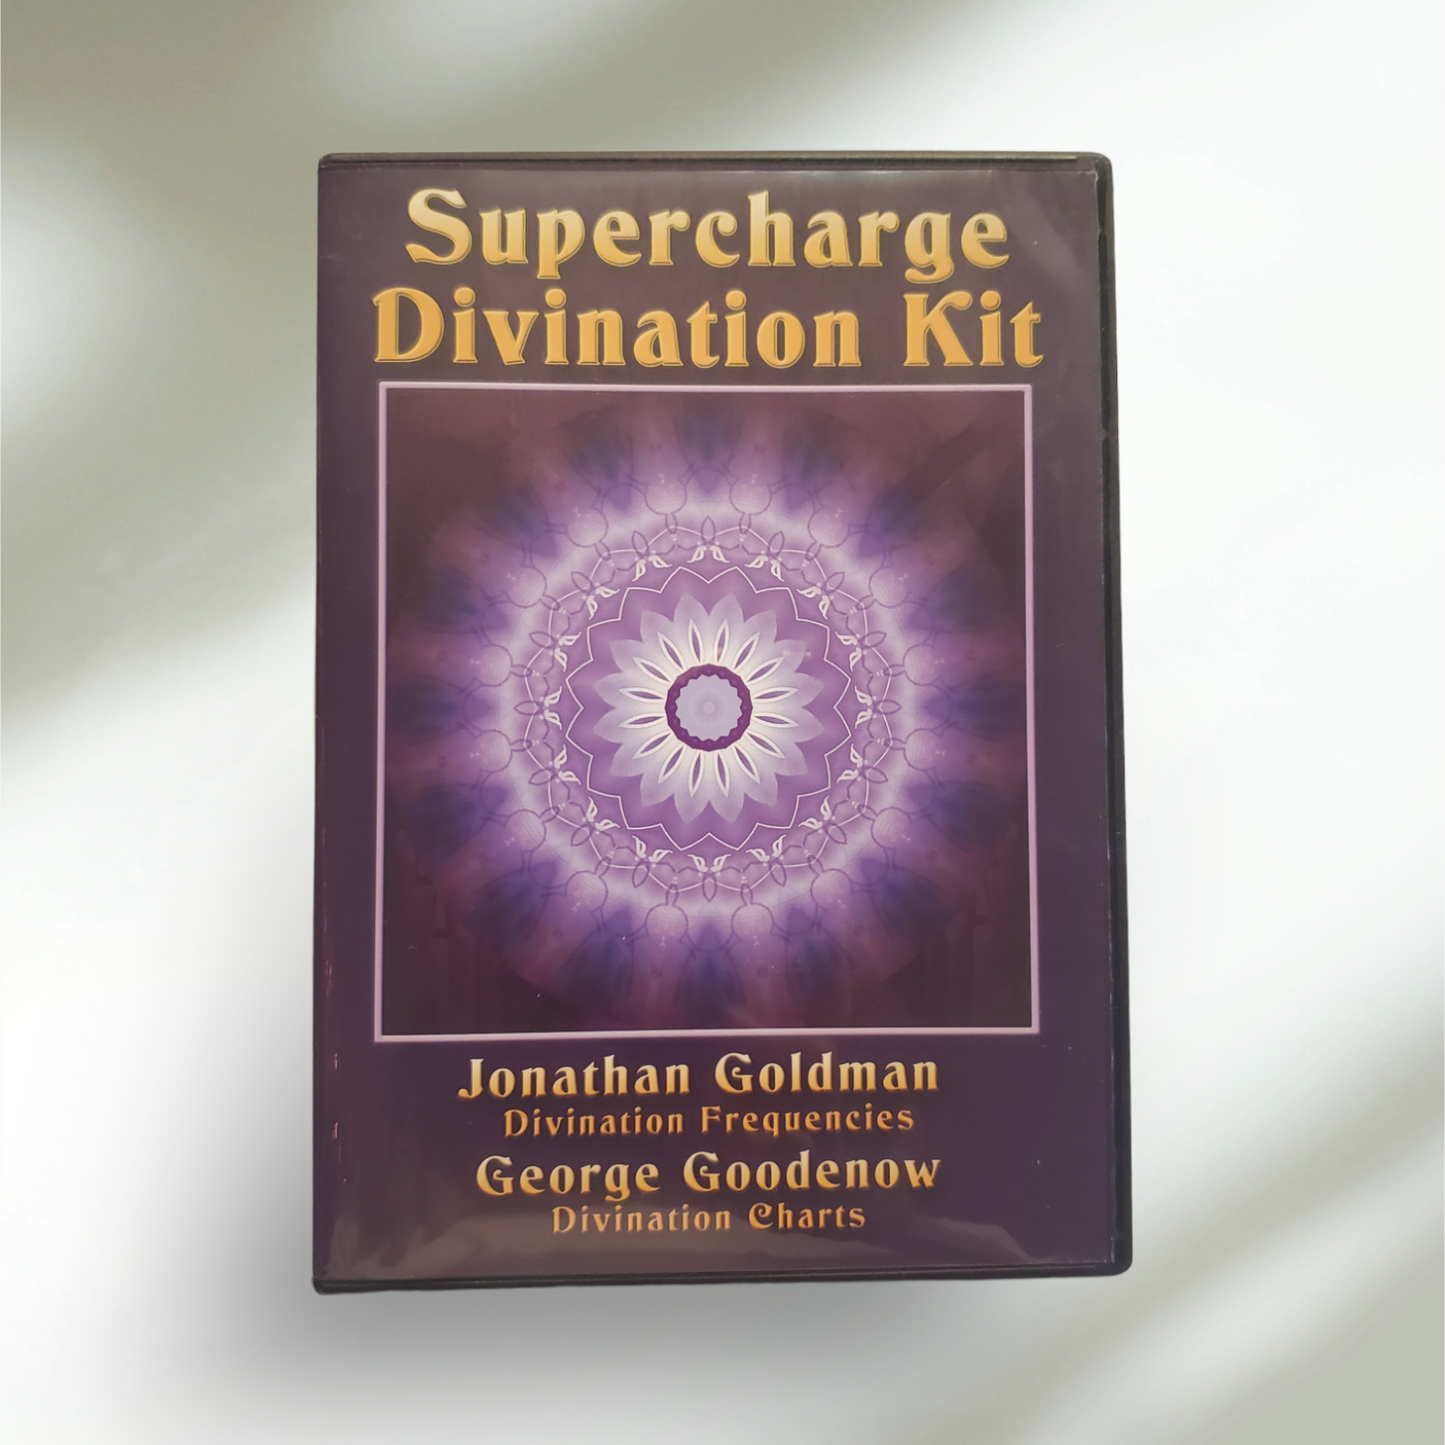 Divination Kit